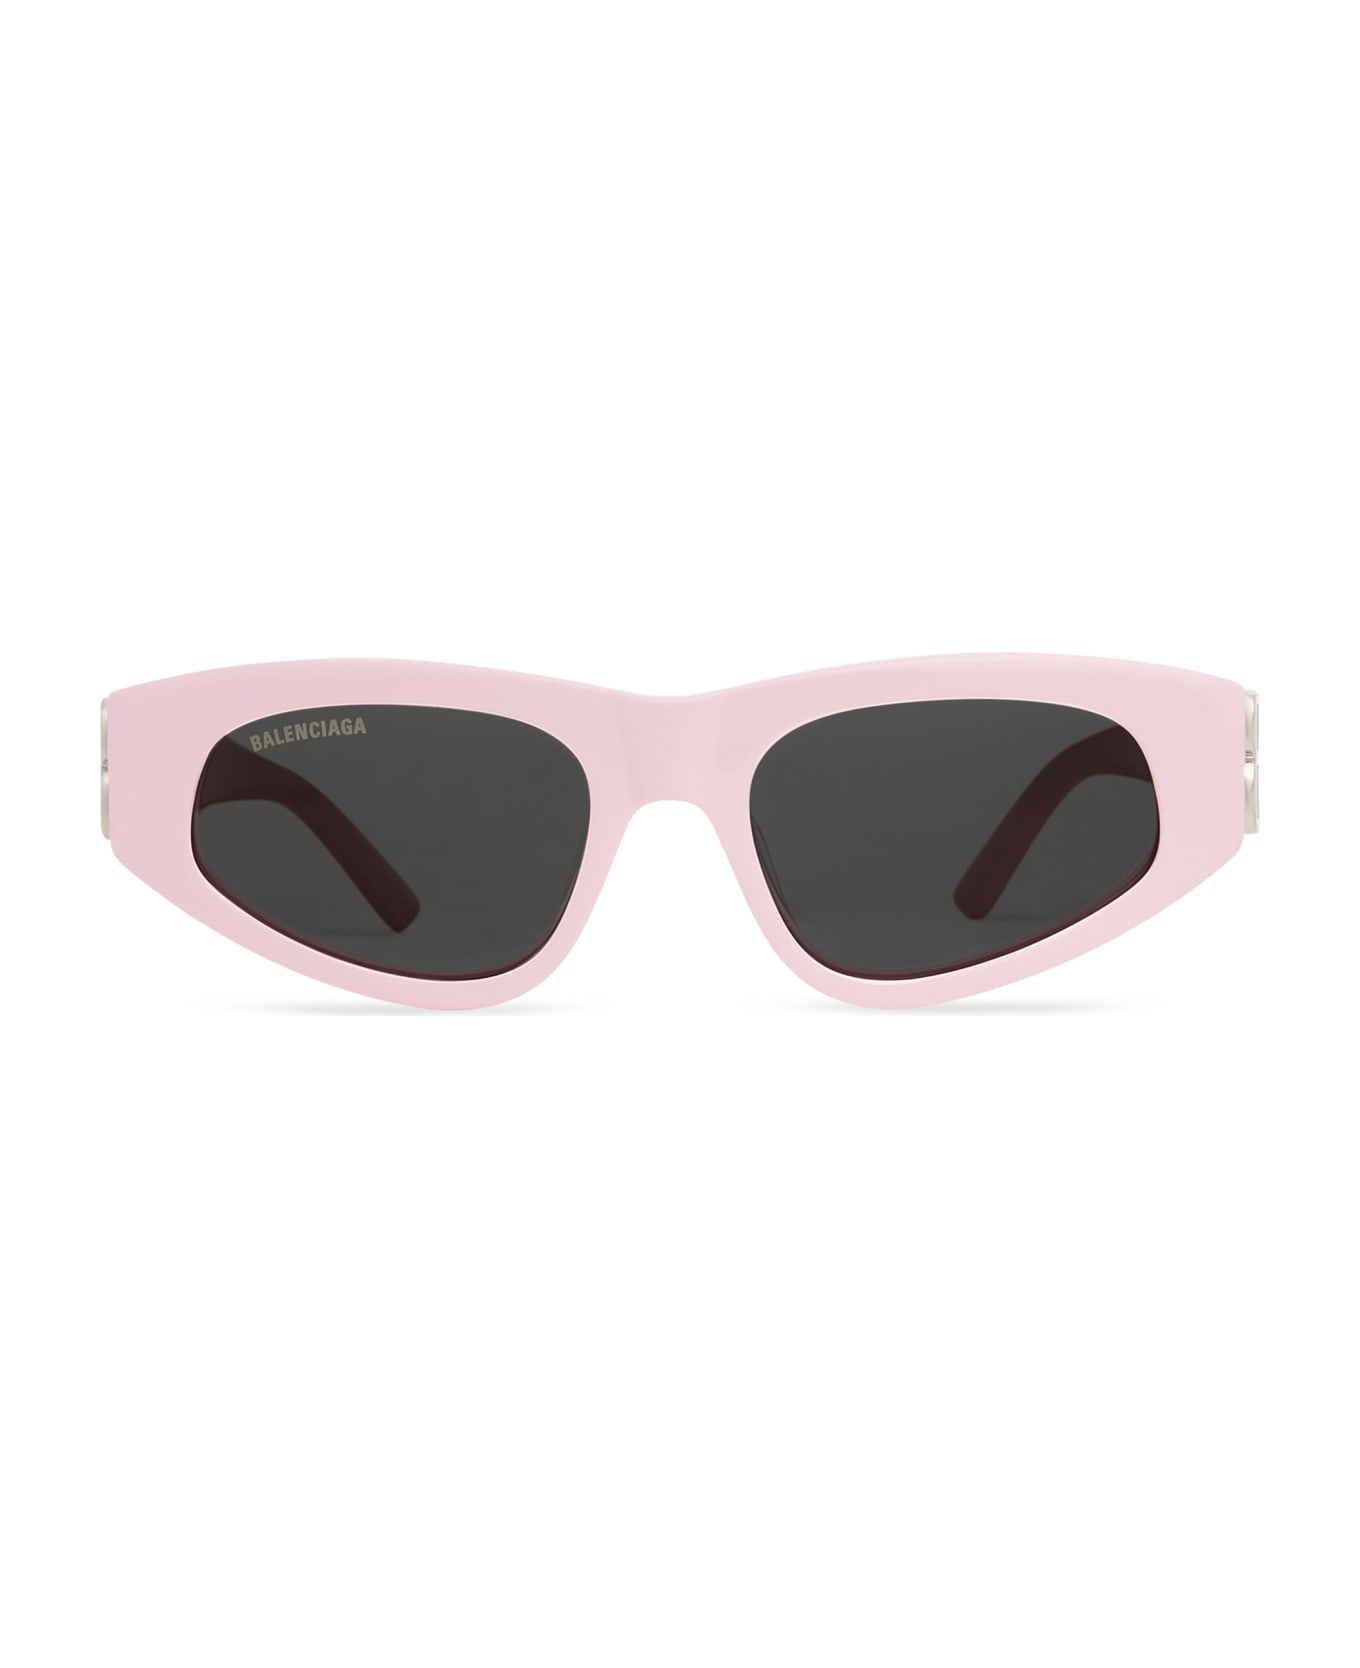 Balenciaga Eyewear Dynasty D-frame - Pink Sunglasses - pink